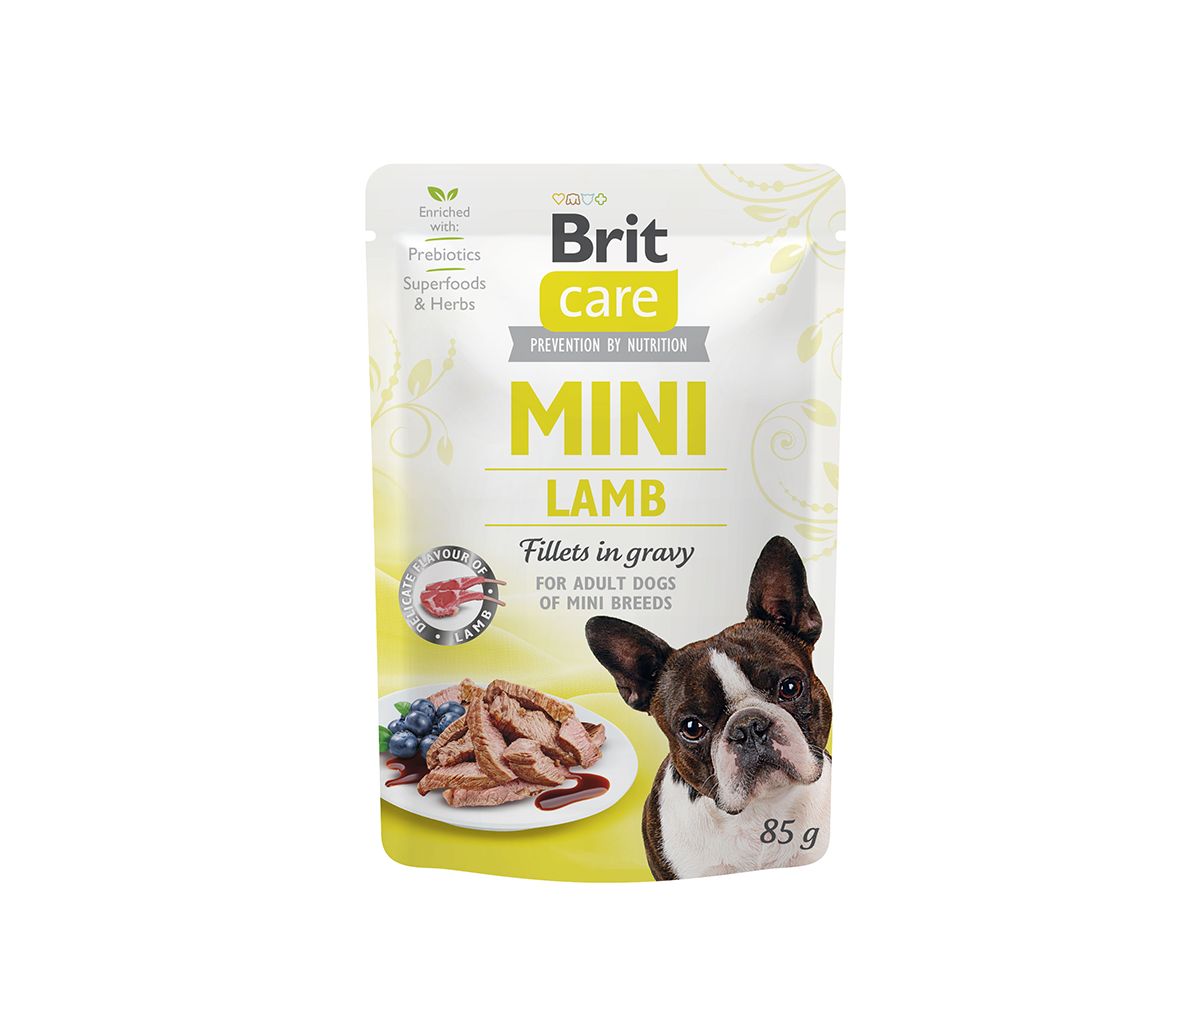 Konservuotas ėdalas šunims Brit Care Mini Lamb fillets in gravy, 85 g